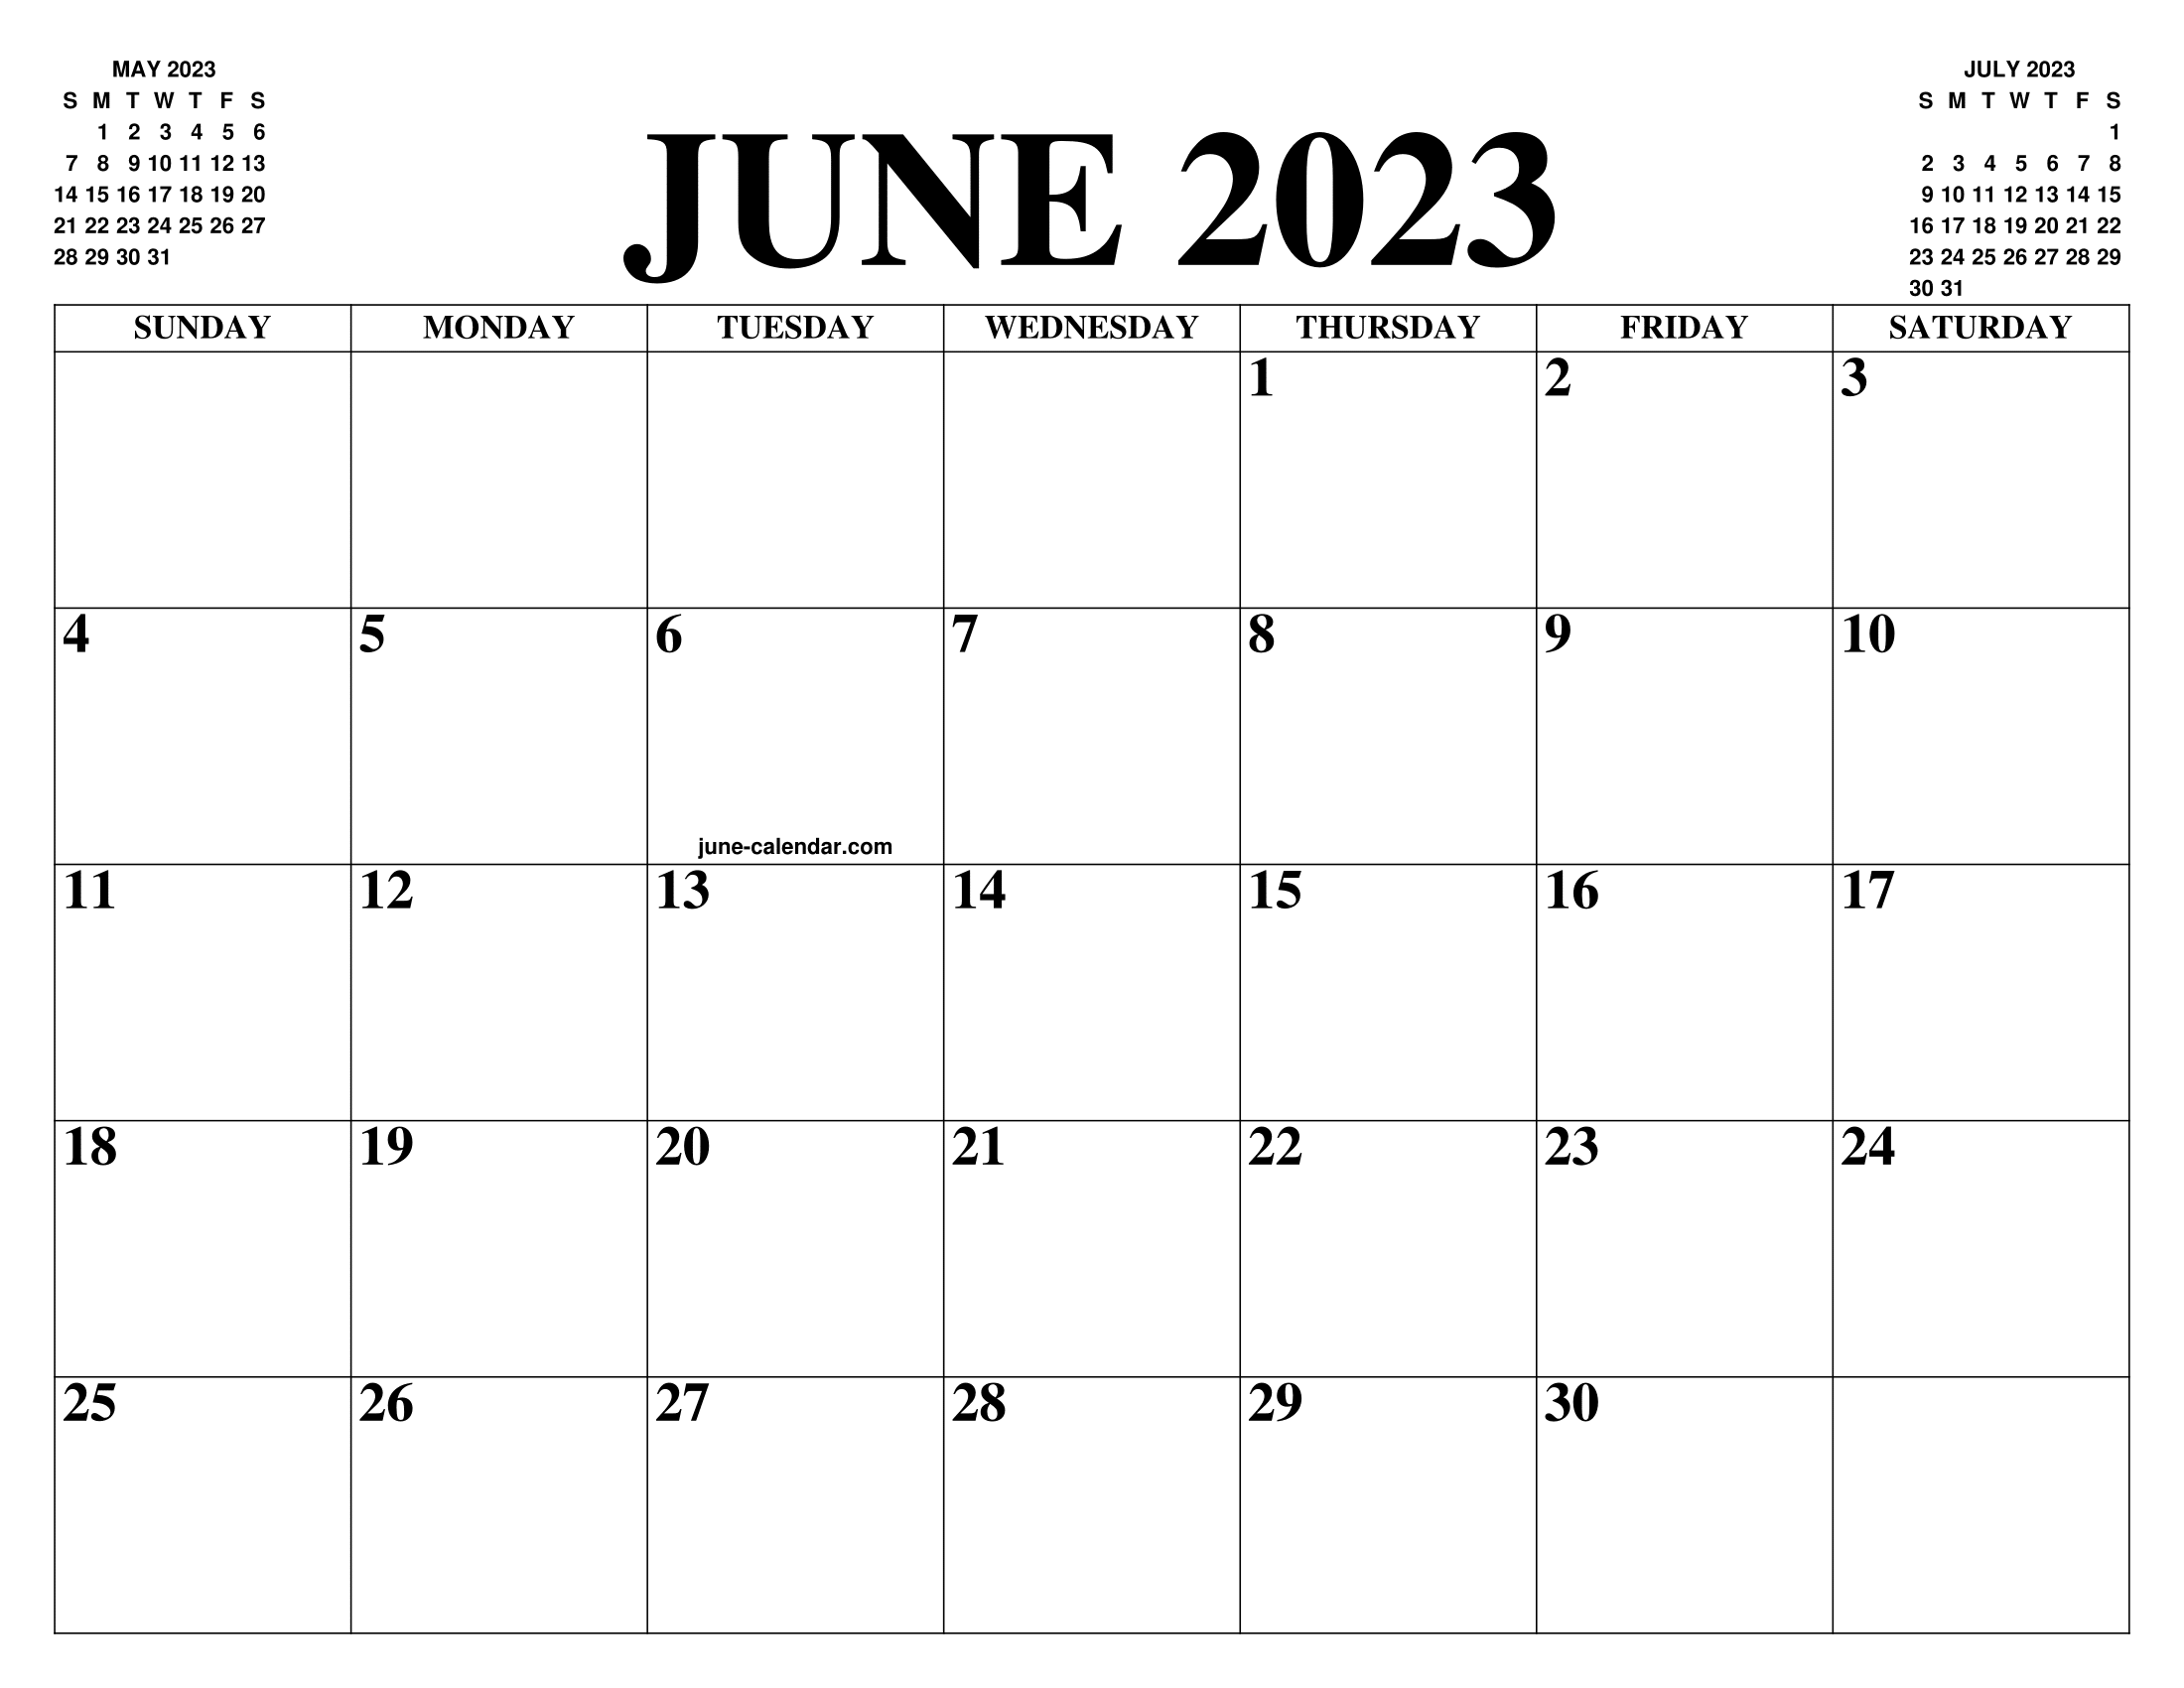 JUNE 2023 2024 CALENDAR OF THE MONTH FREE PRINTABLE JUNE 2023 2024